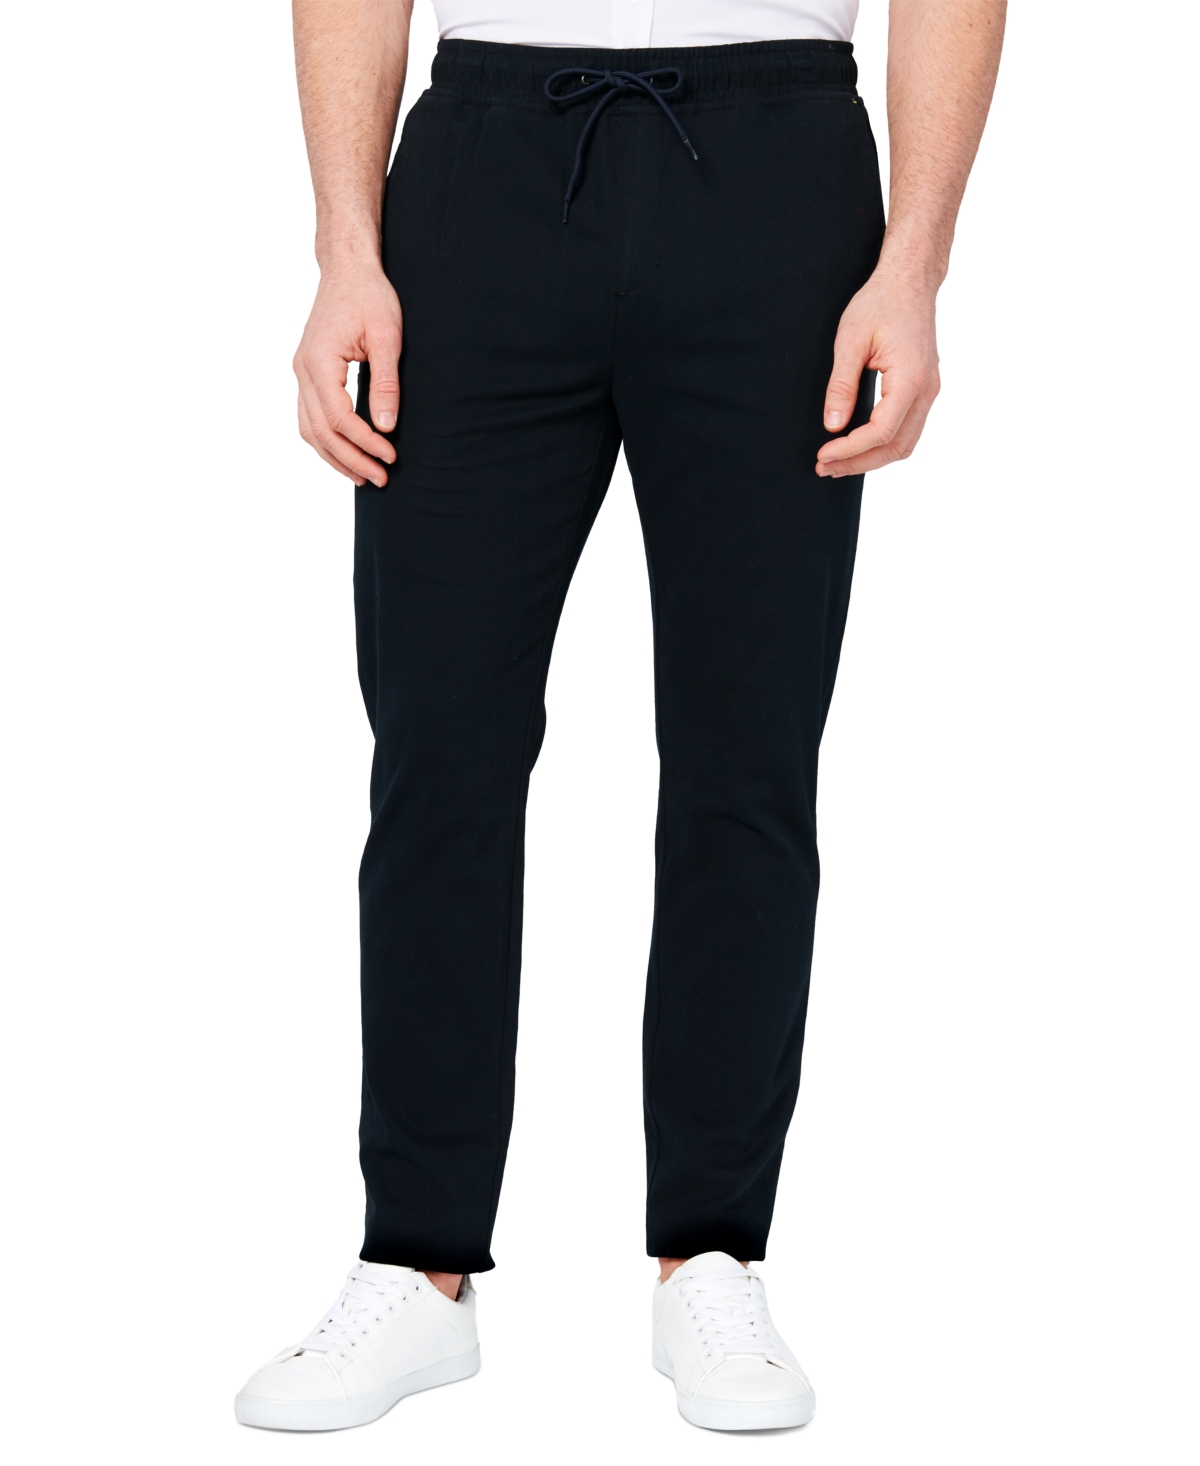 Men's Slim Fit Solid Drawstring Pants - Black